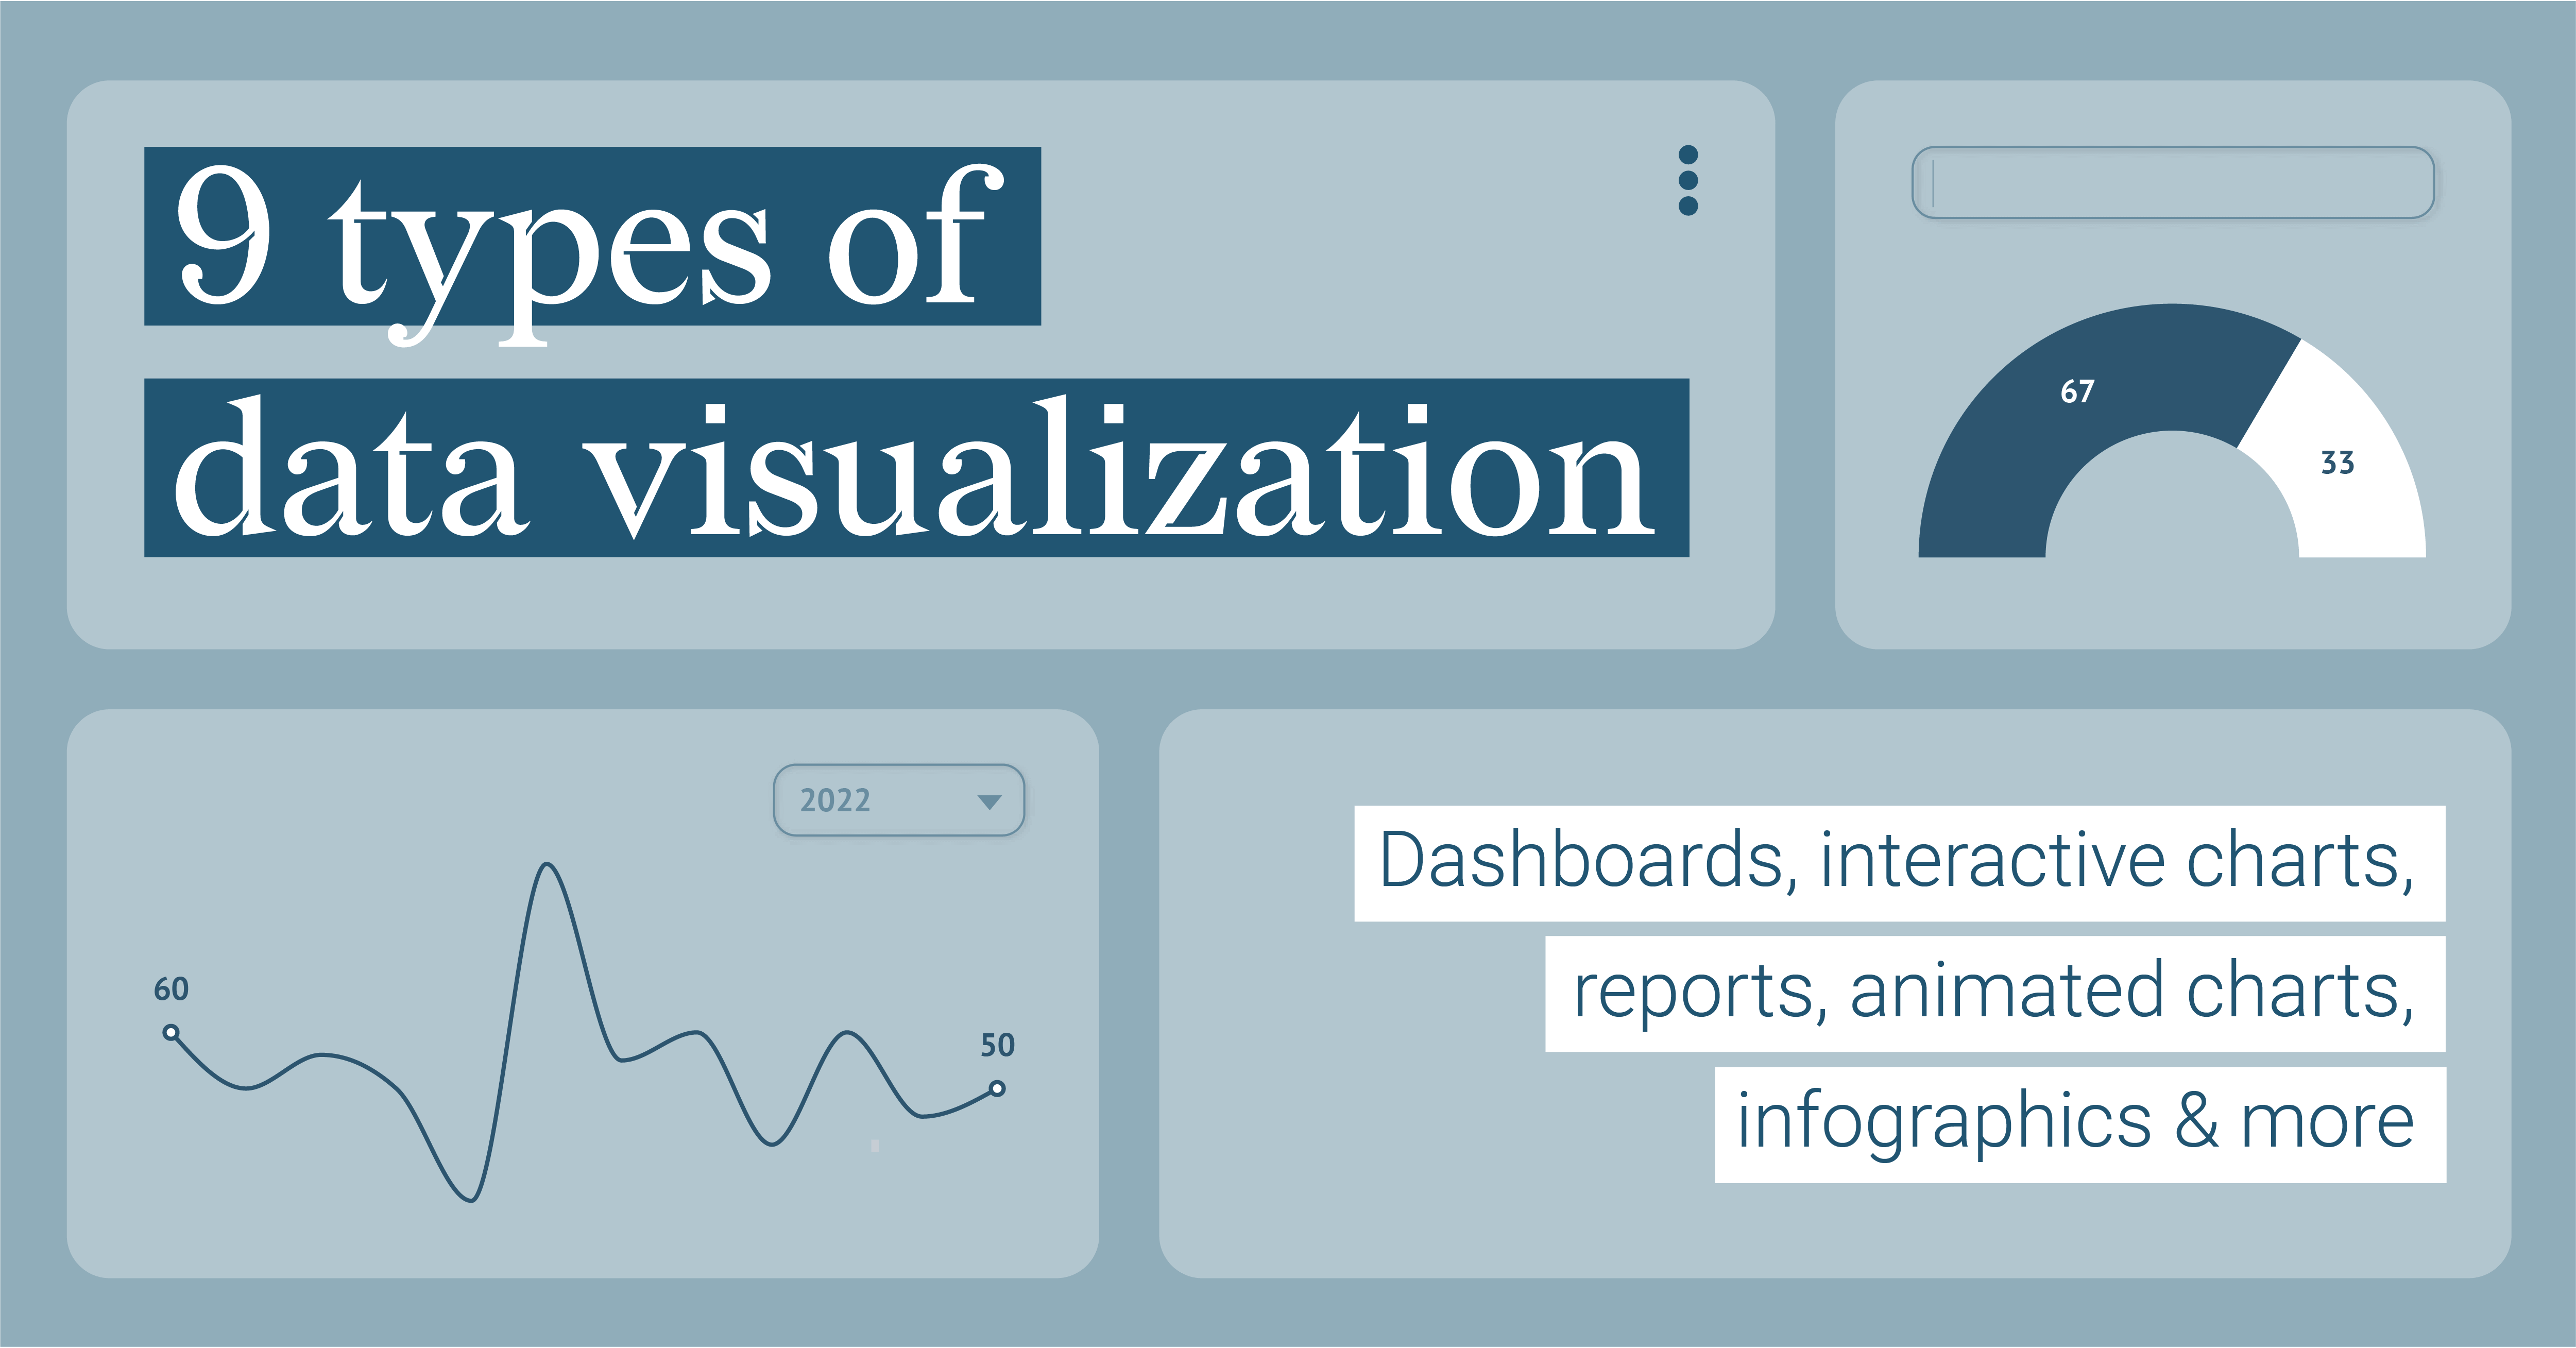 data visualization images